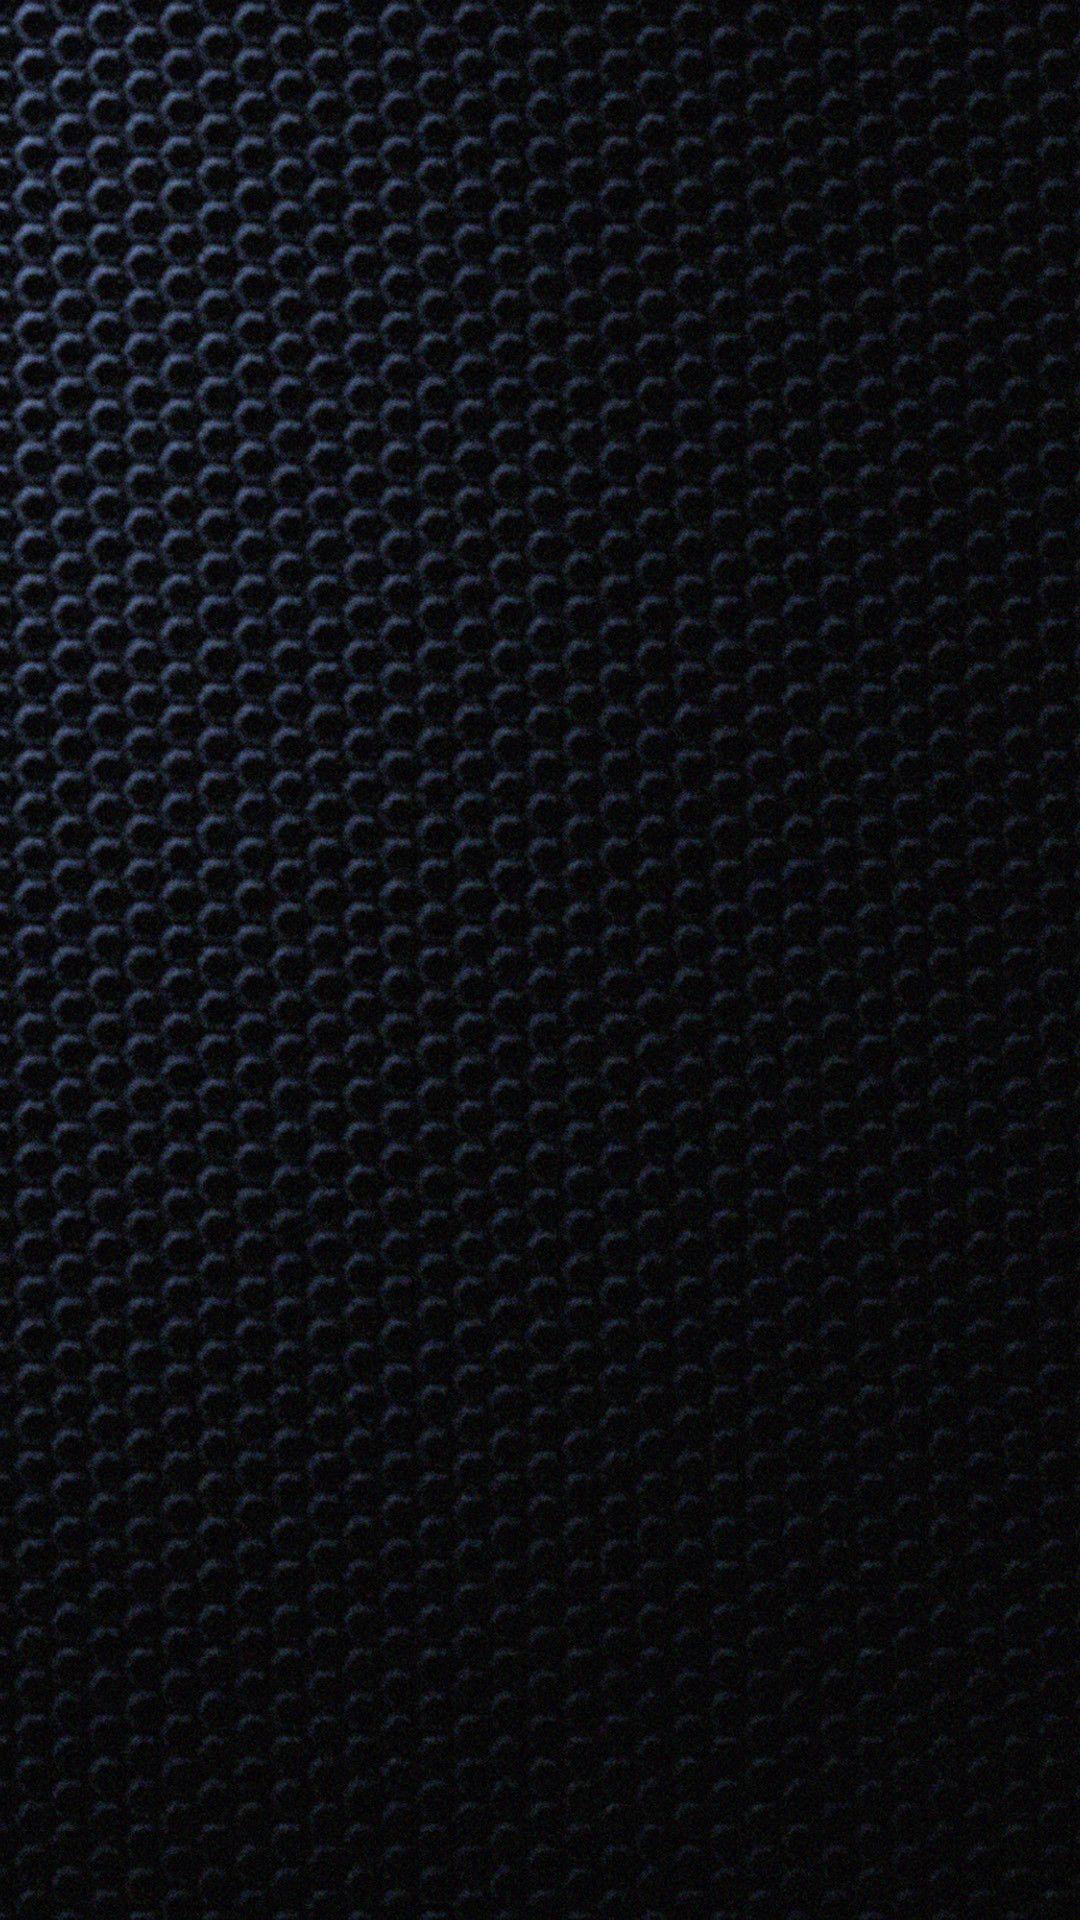 galaxy s5 wallpaper black